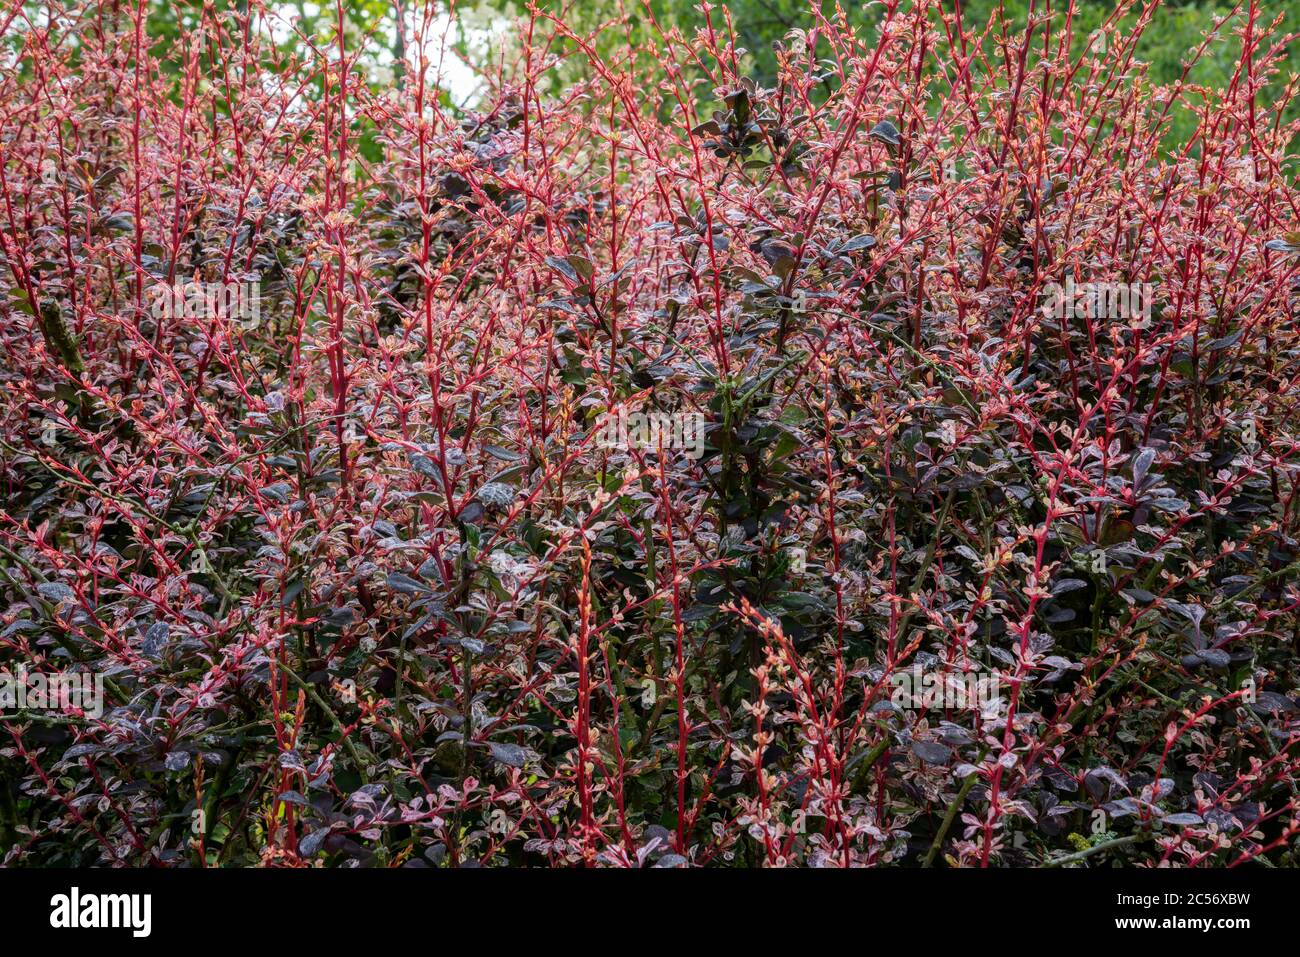 Close up BERBERIS thunbergii f. atropurpurea 'Rose Glow' bush. New red shoots with deep purple leaves. Stock Photo